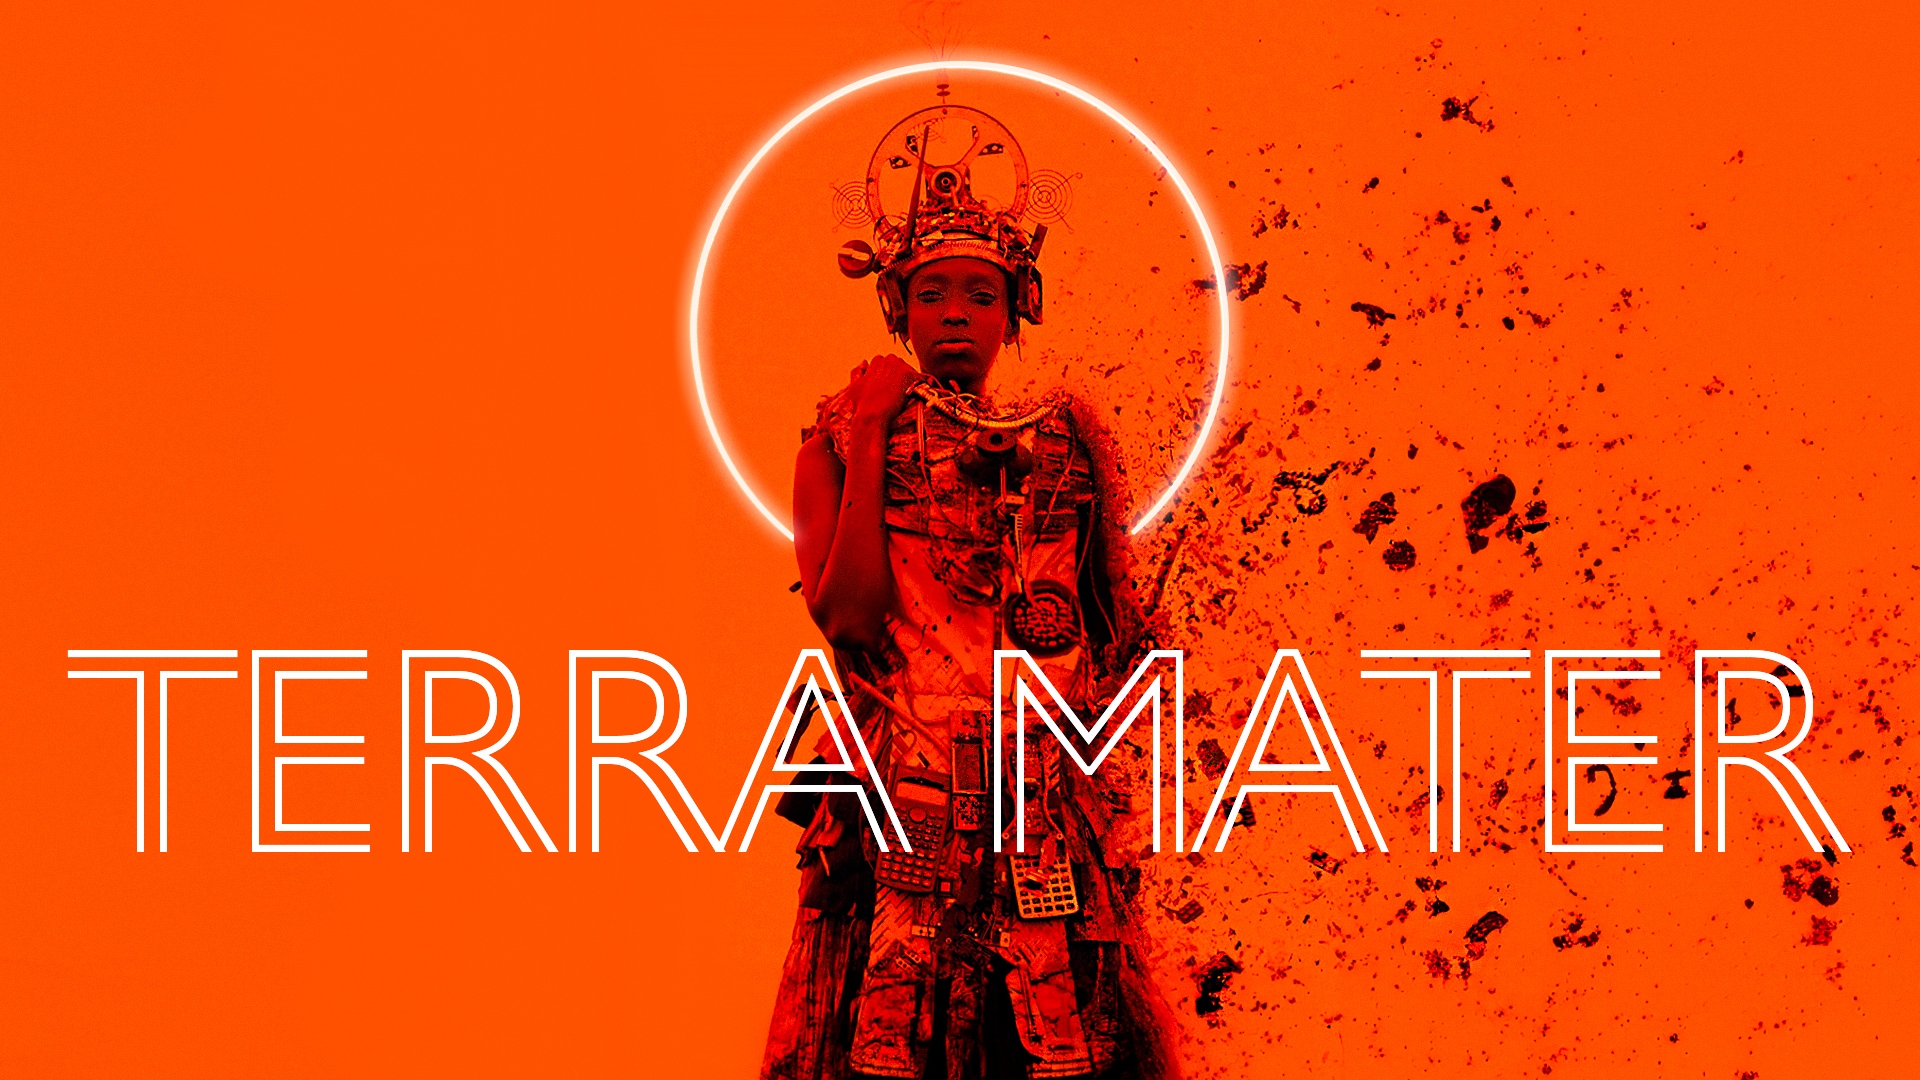 Terra Mater (Postcards from the Future by Kantarama Gahigiri)